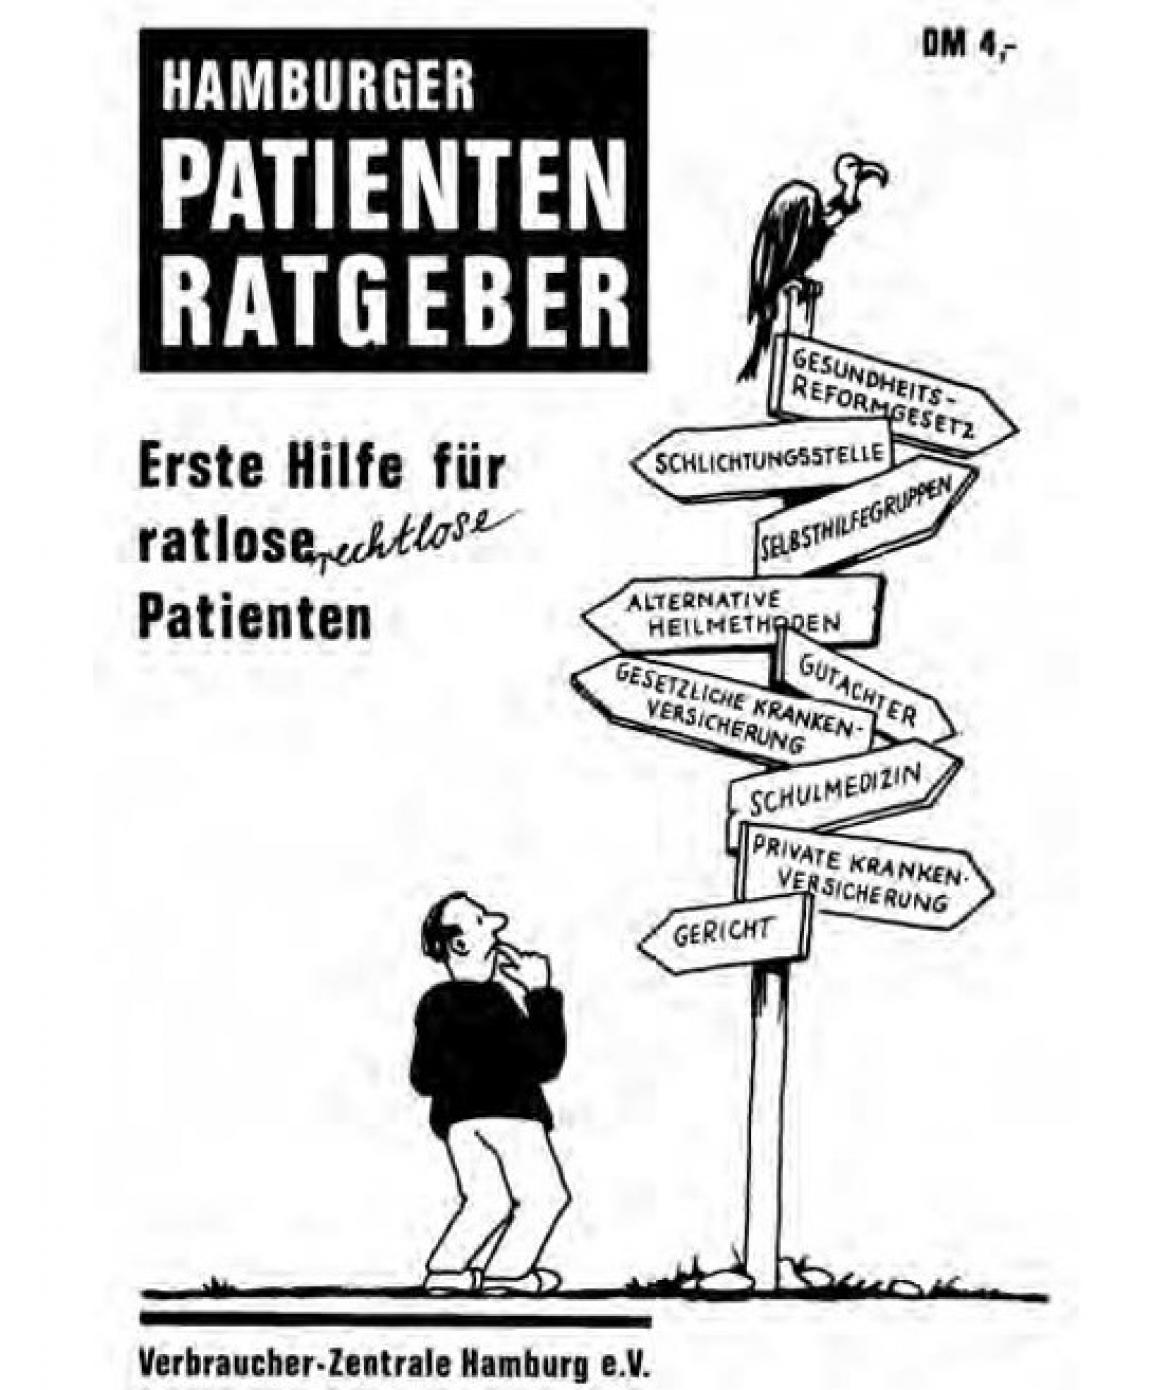 "Hamburger Patienten Ratgeber" der Verbraucher-Zentrale (1988)